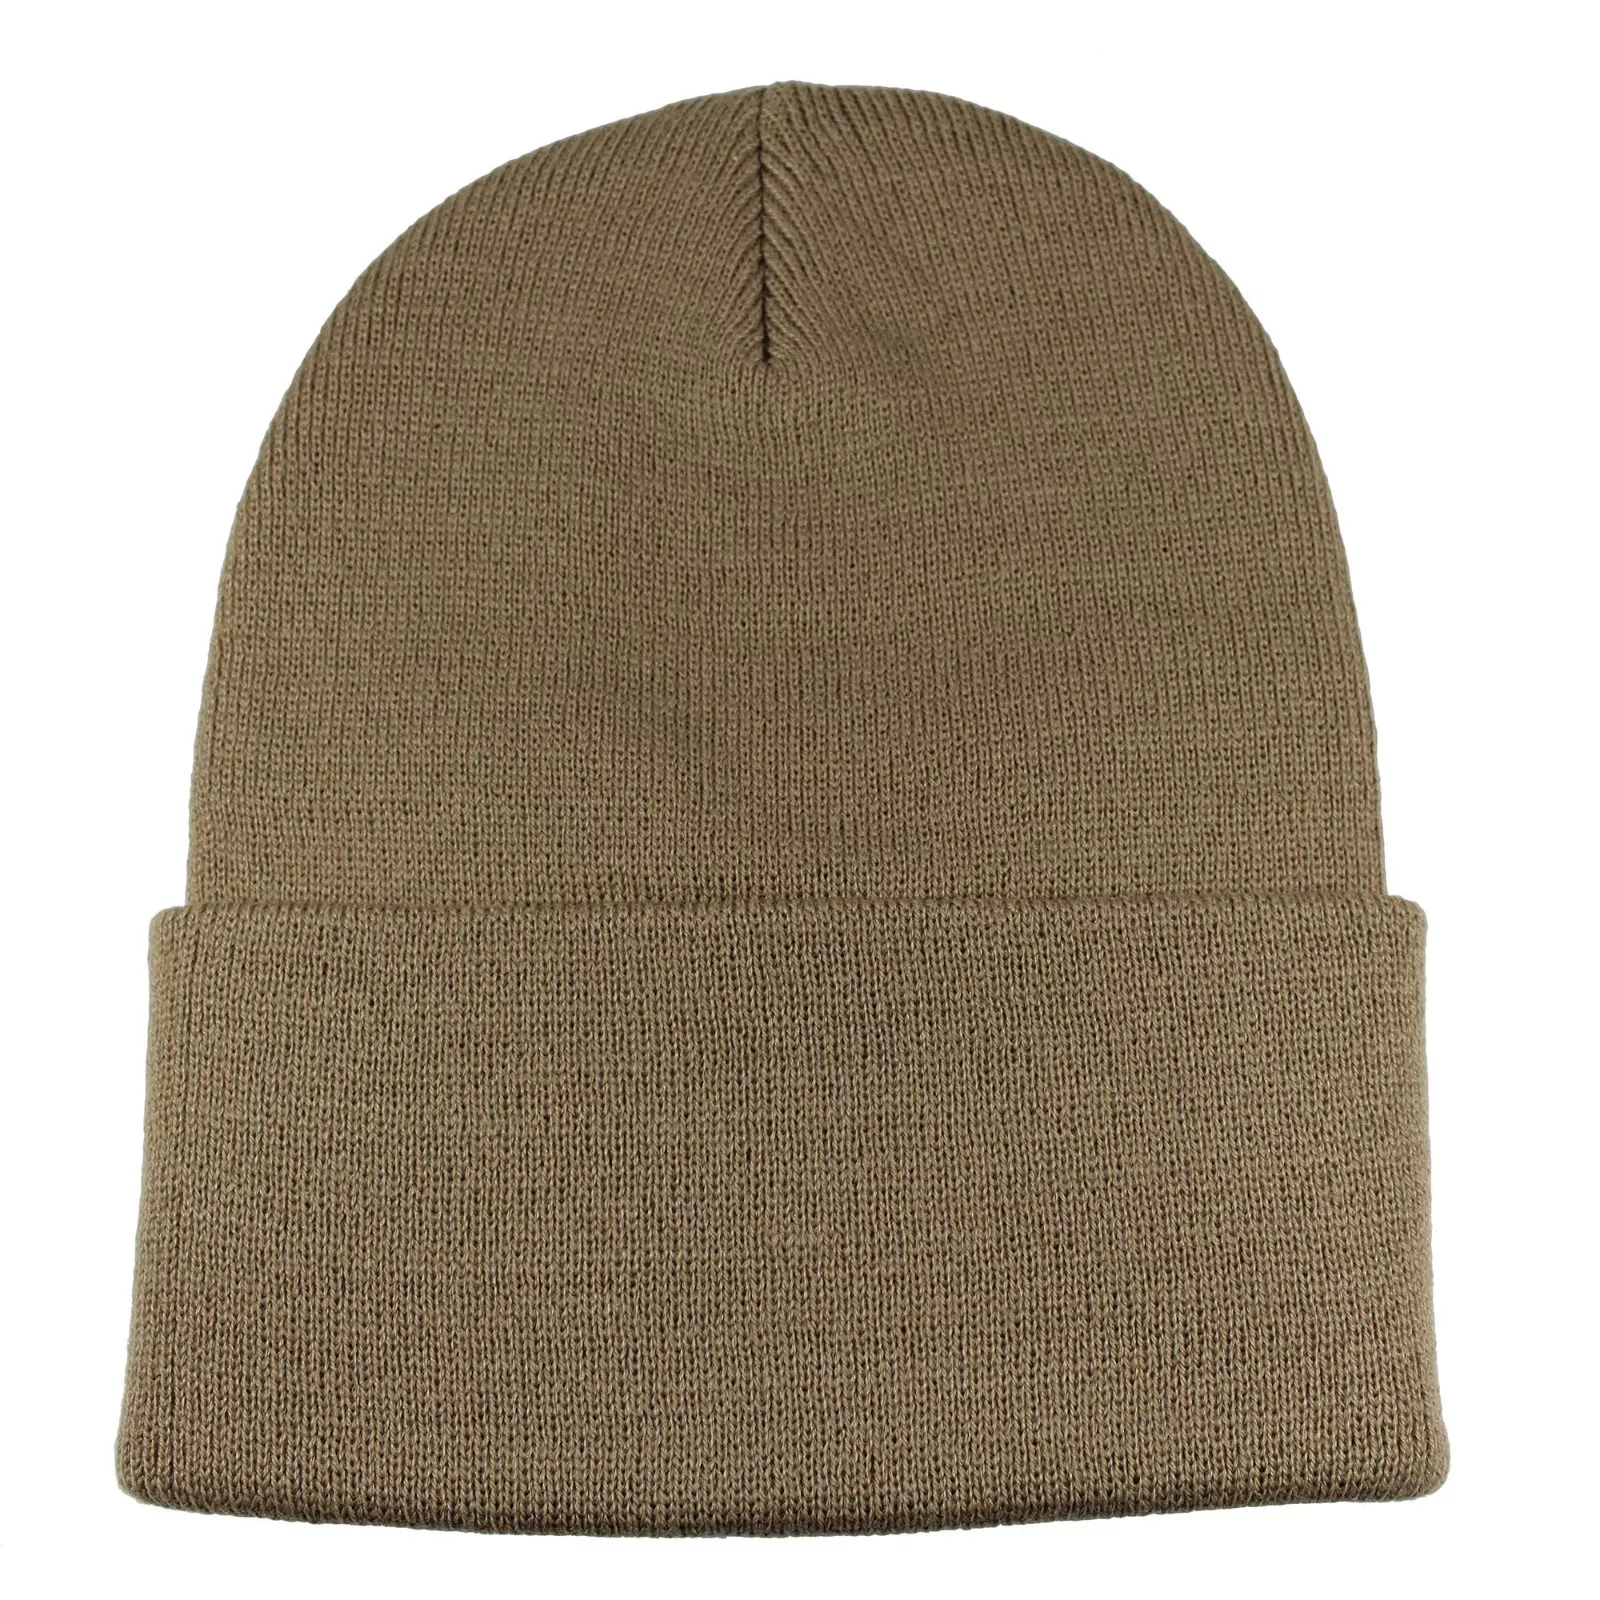 Unisex Plain Warm Knit Beanie Hat Cuff Skull Ski Cap Khaki1pcs - £7.89 GBP